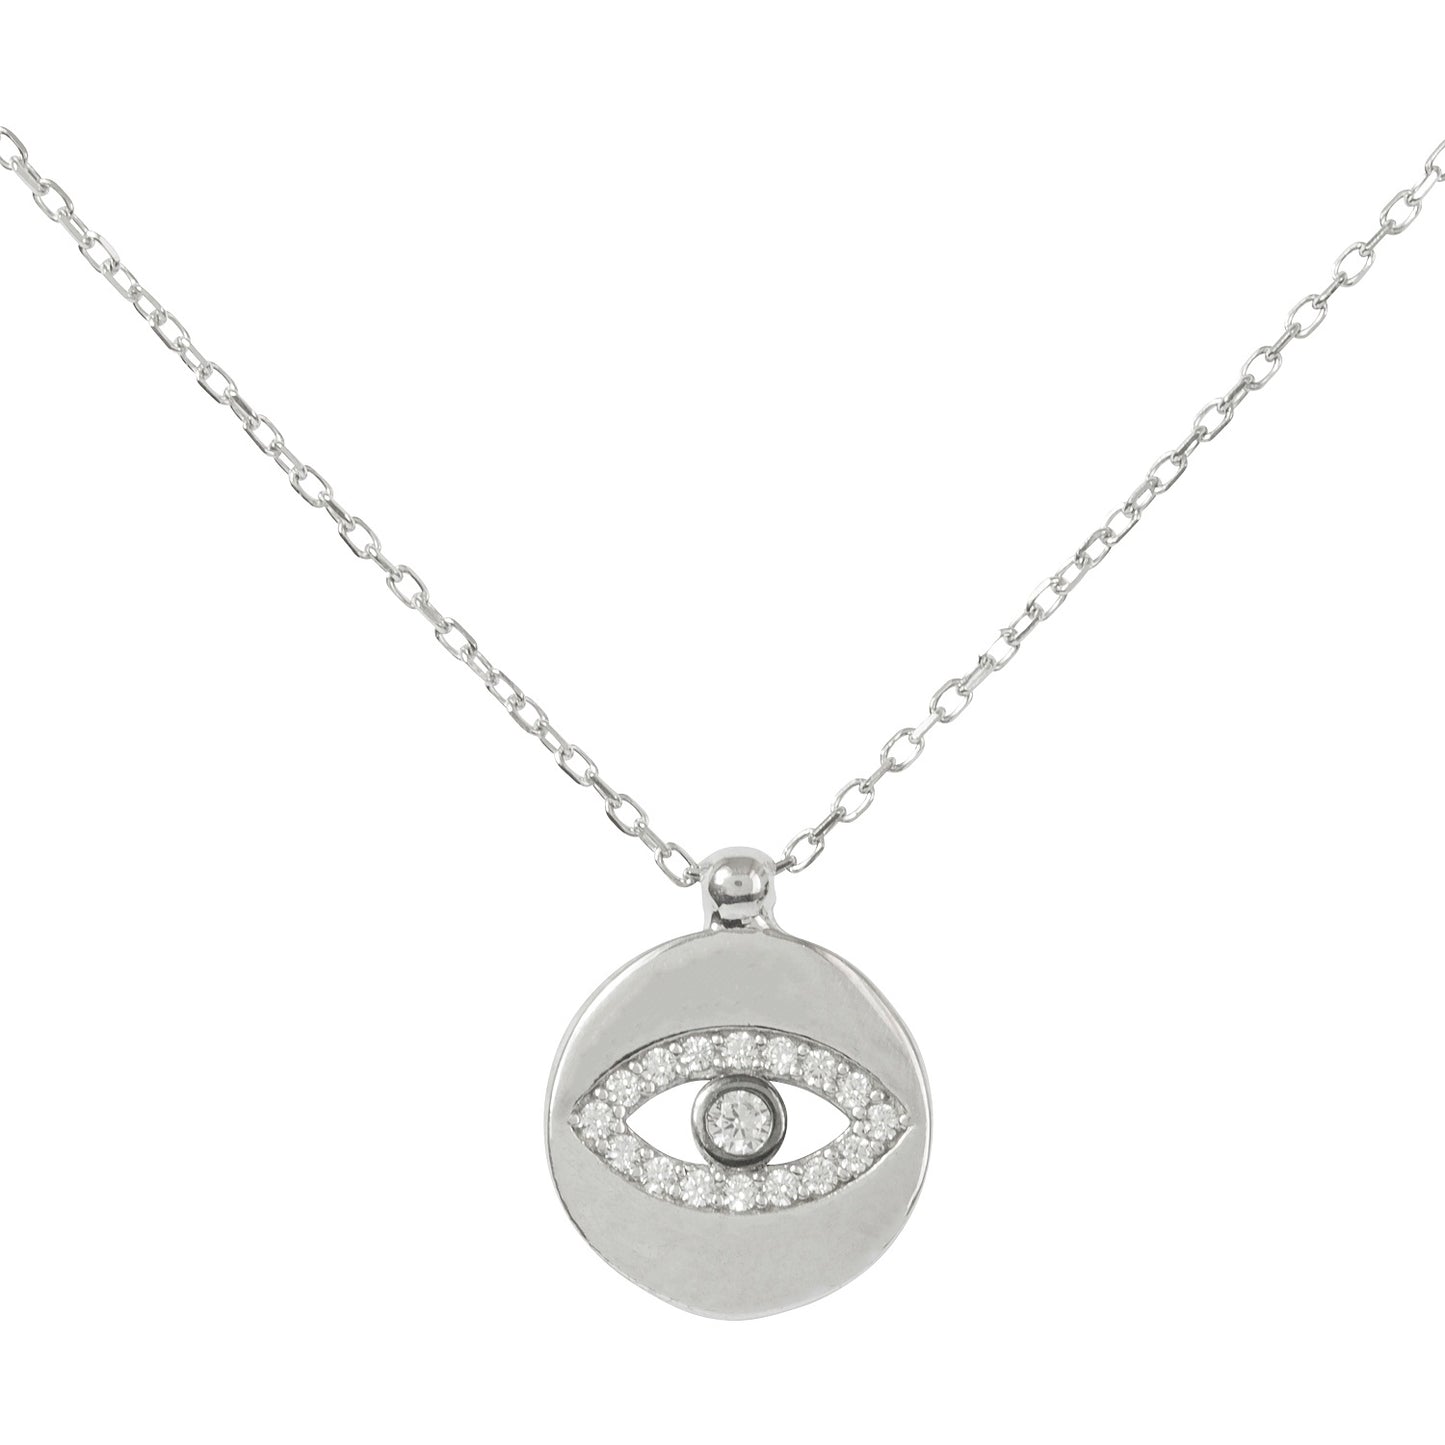 Round Coin Evil Eye Necklace - New Design